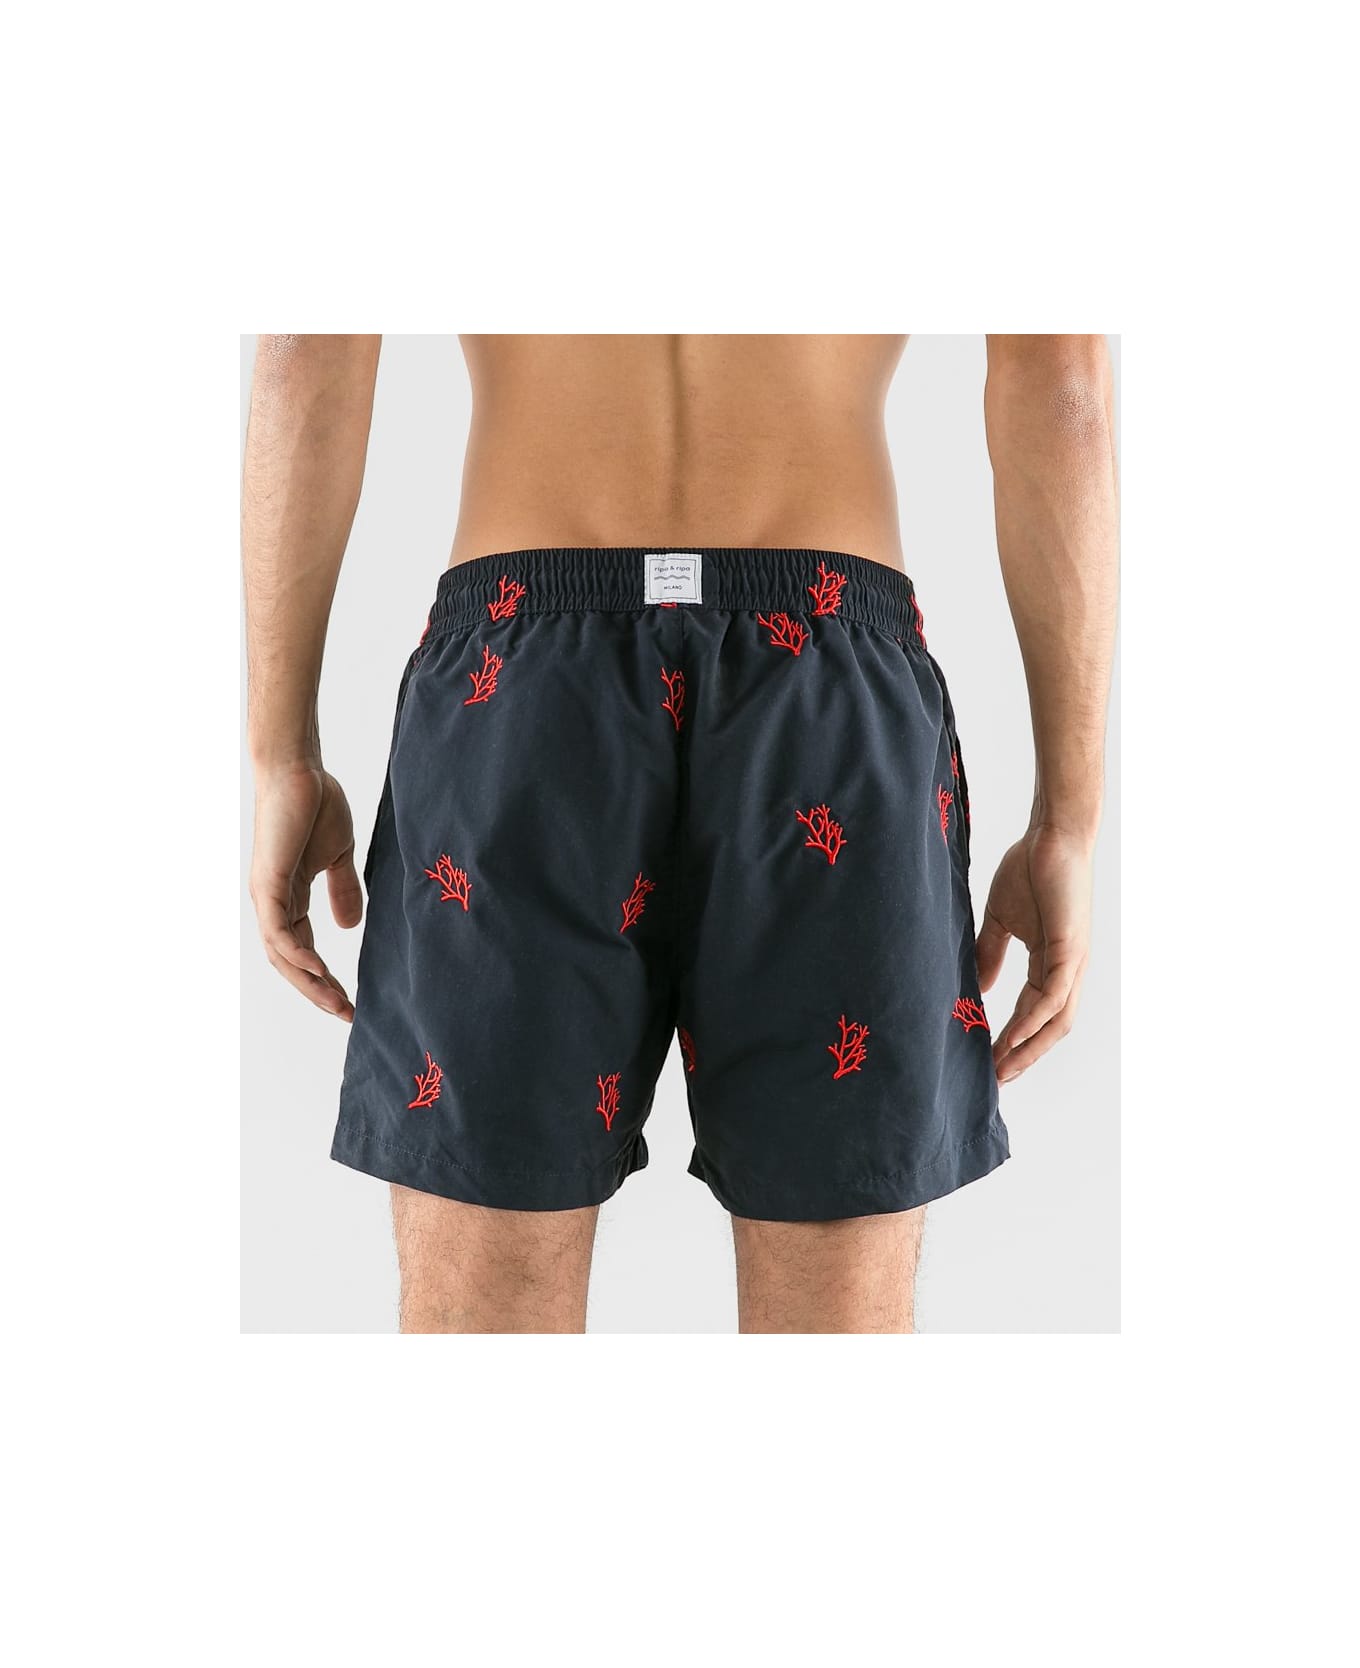 Ripa Ripa Positano Embroidered Swim Shorts - Embroidered